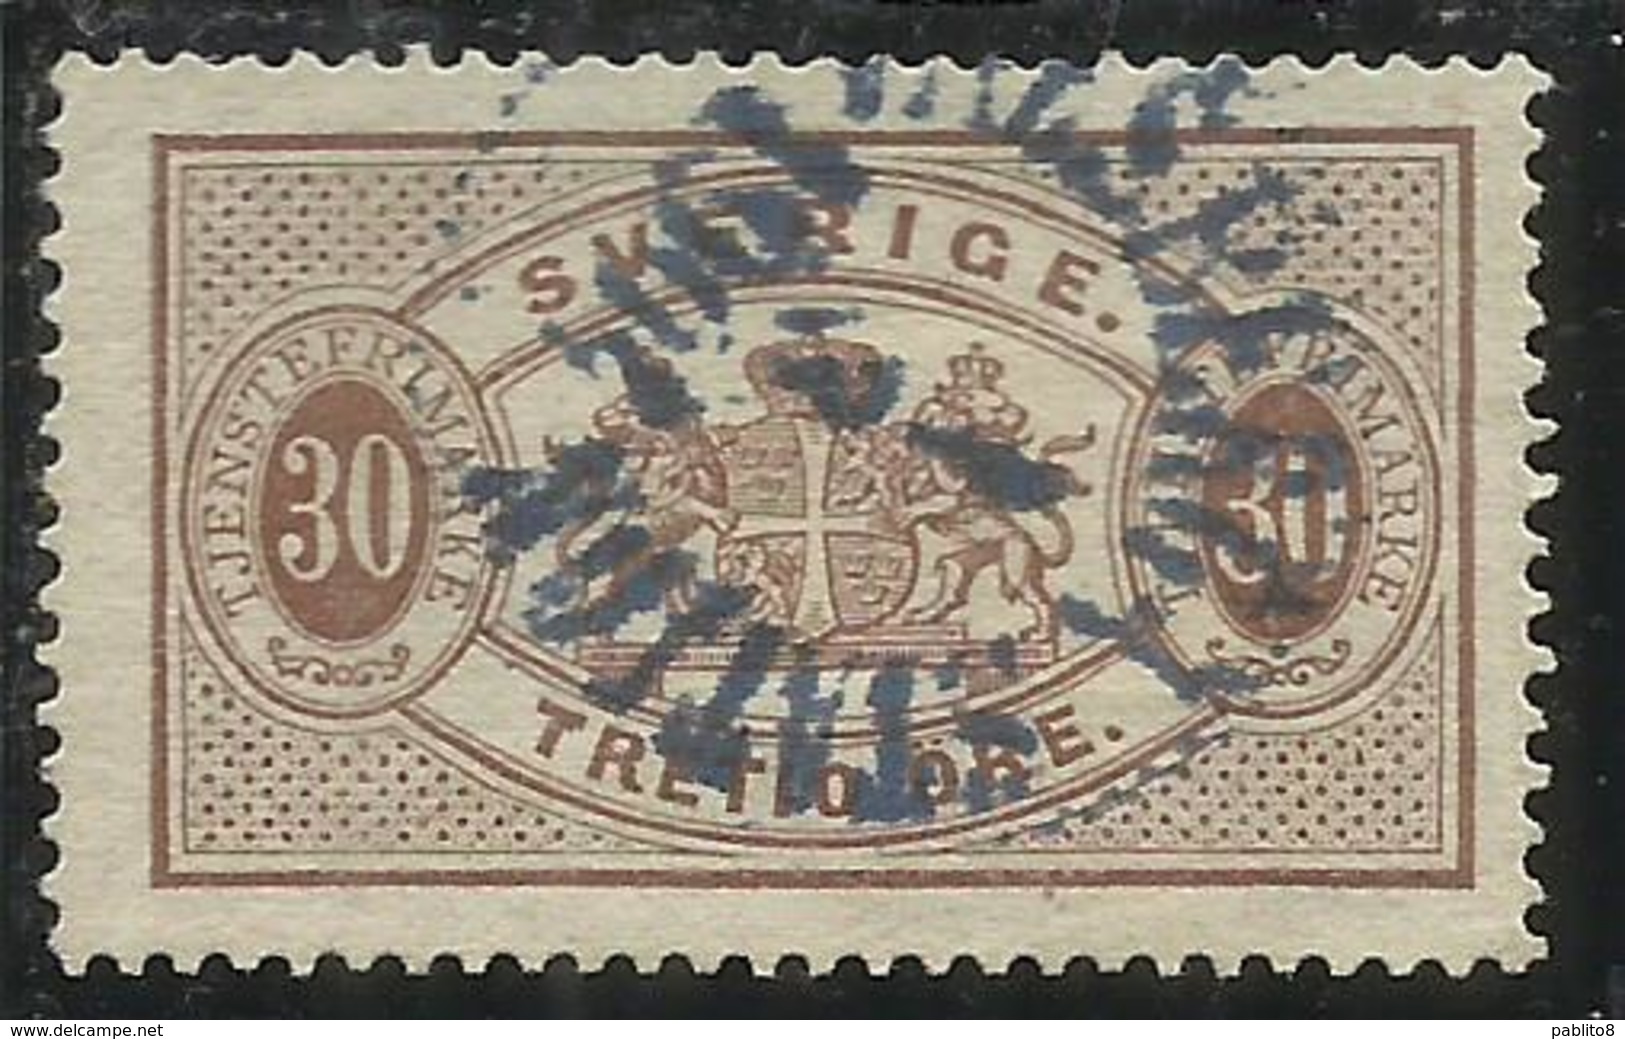 SWEDEN SVERIGE SVEZIA SUEDE 1874 1877 OFFICIAL STAMPS ORE 30o USATO USED OBLITERE' - Steuermarken